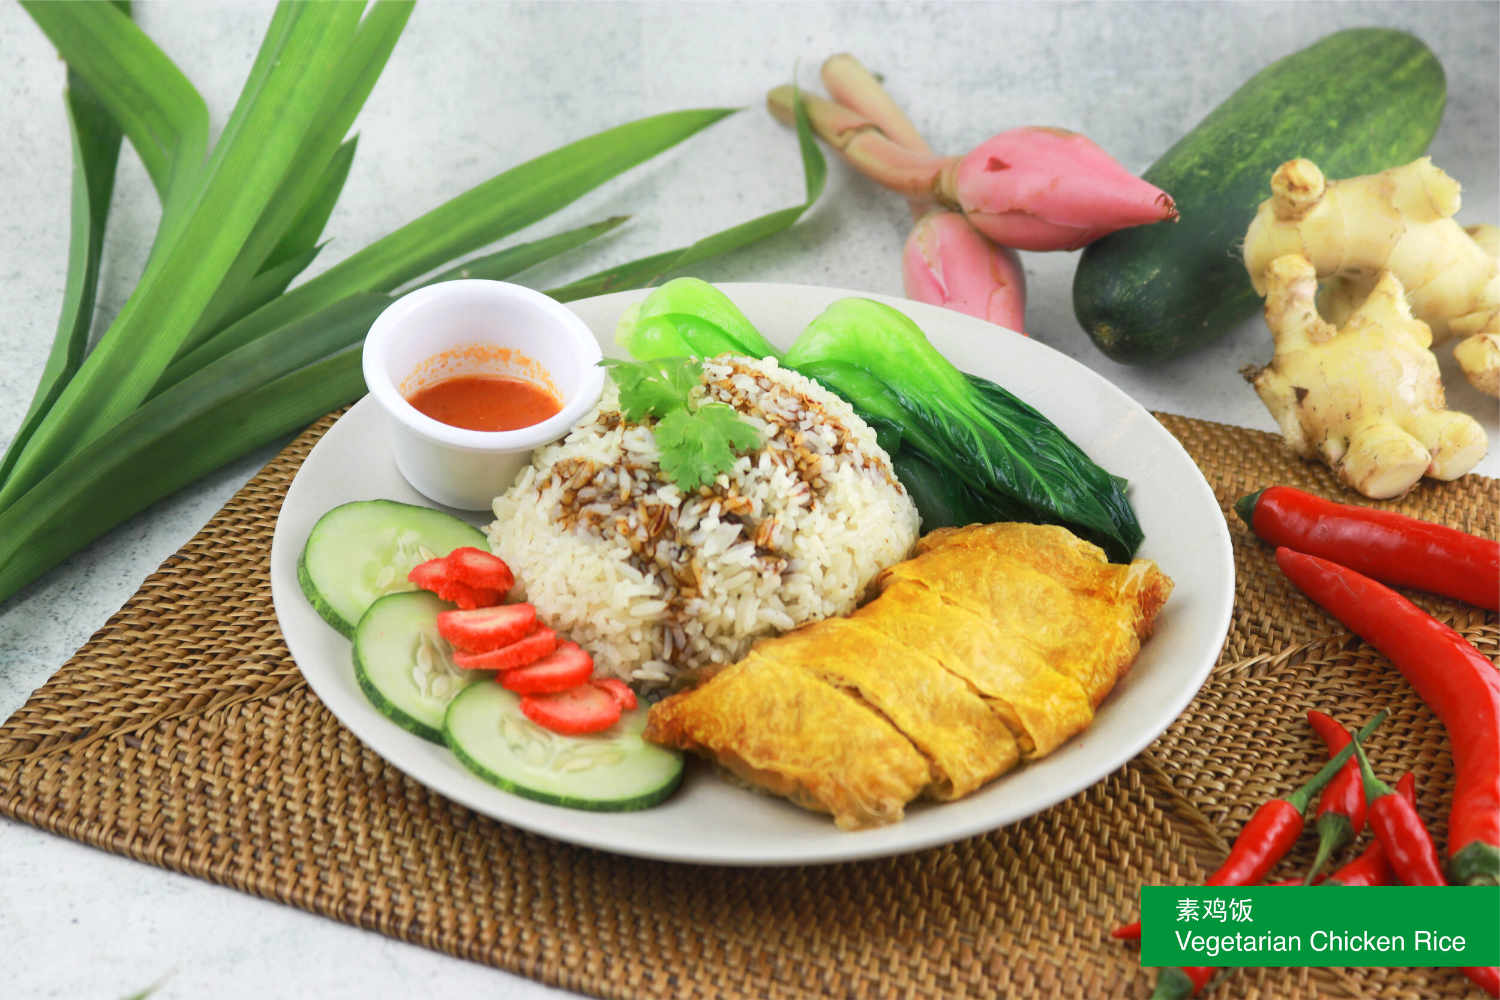 Daily Green's Vegetarian Chicken Rice